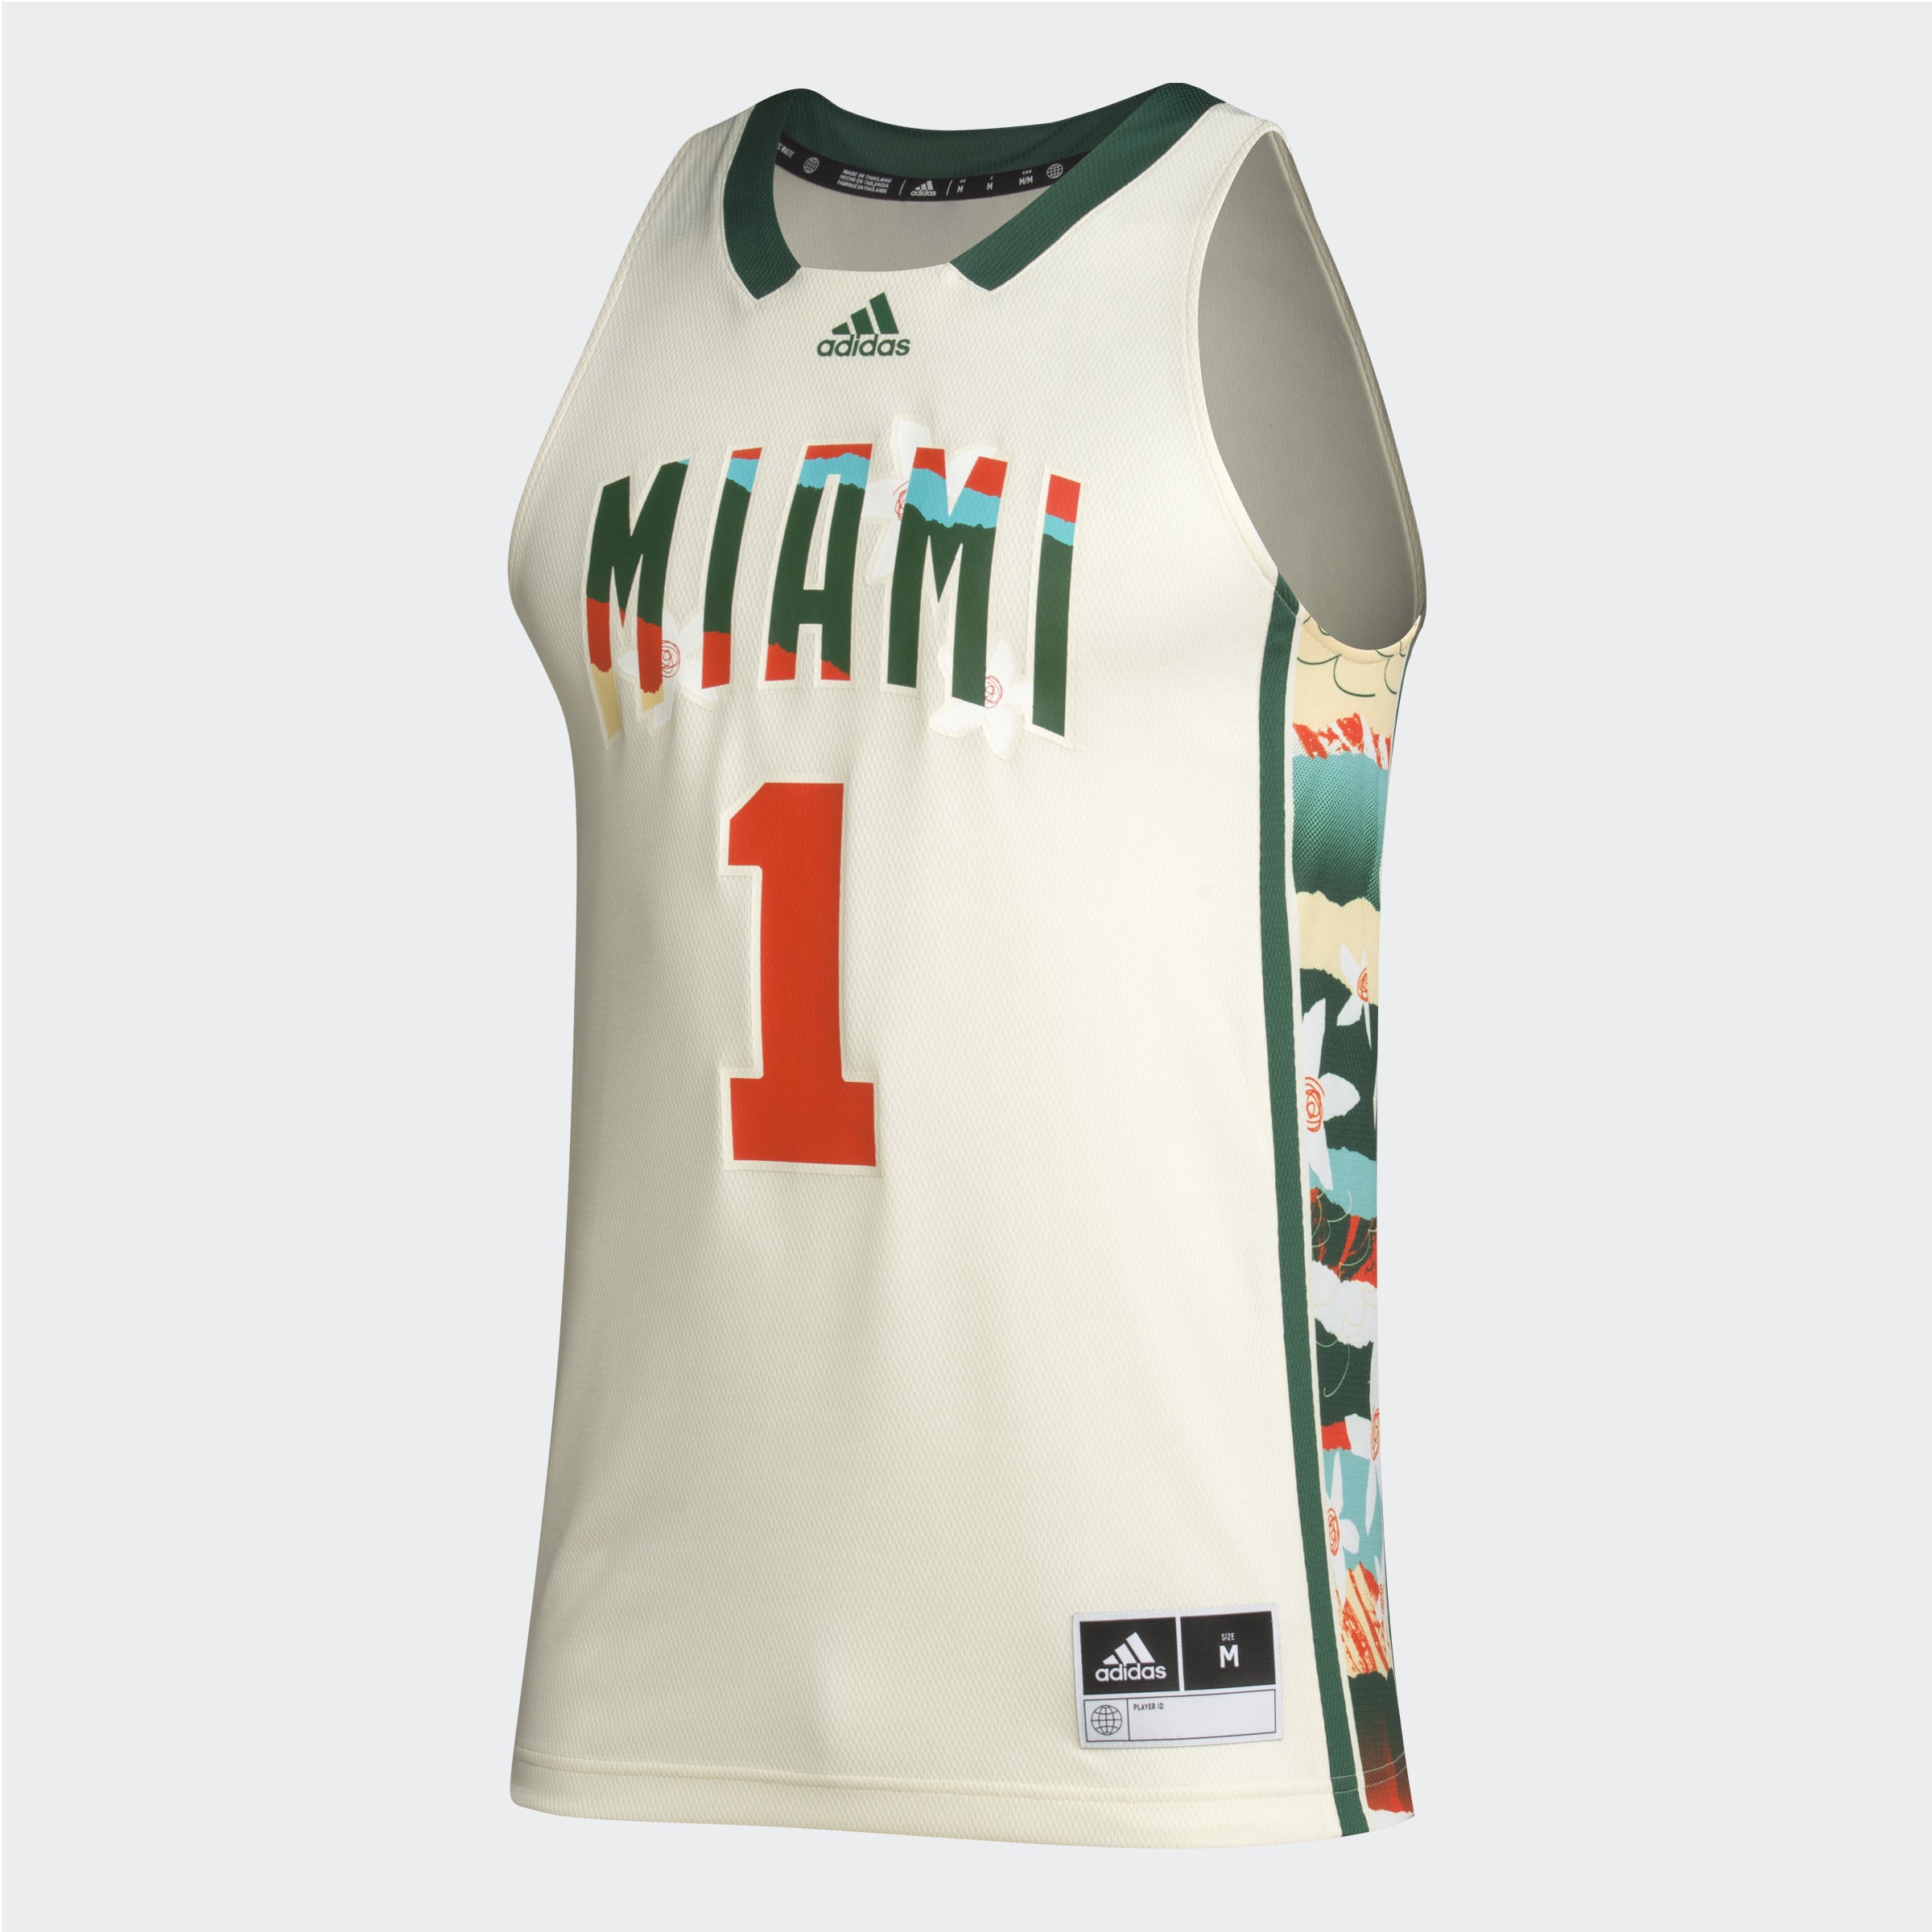 Miami Hurricanes adidas Honoring Black Excellence Basketball Jersey - Khaki